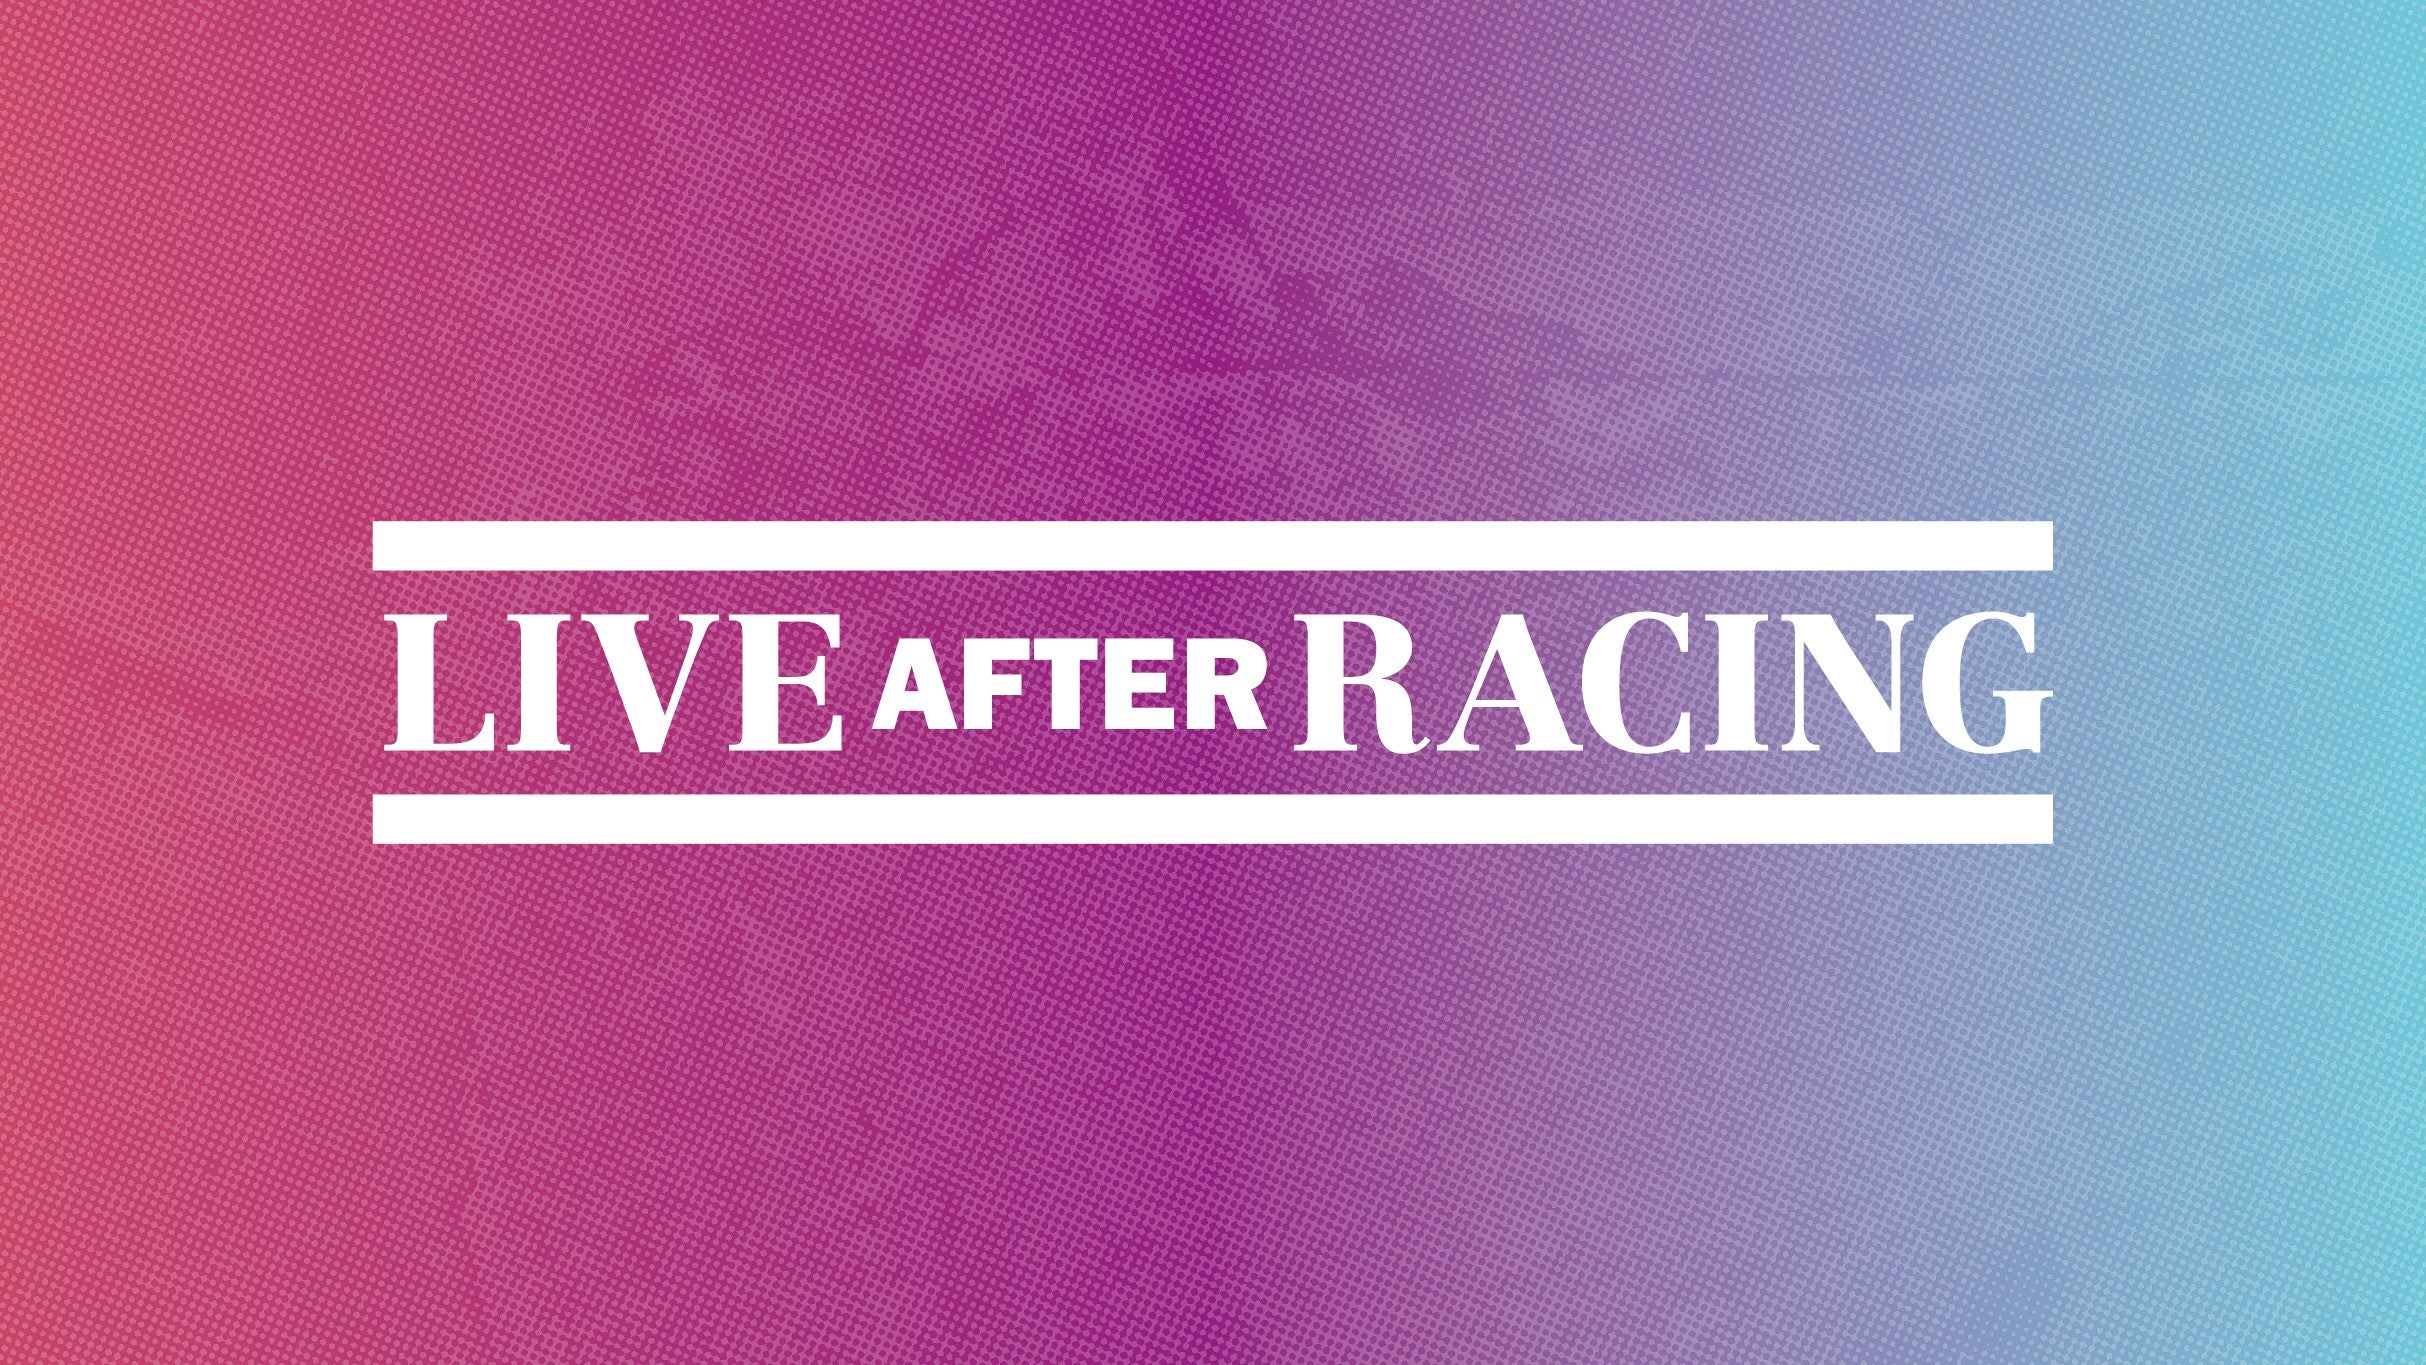 Dizzee Rascal - Live After Racing presale code for legit tickets in Newbury